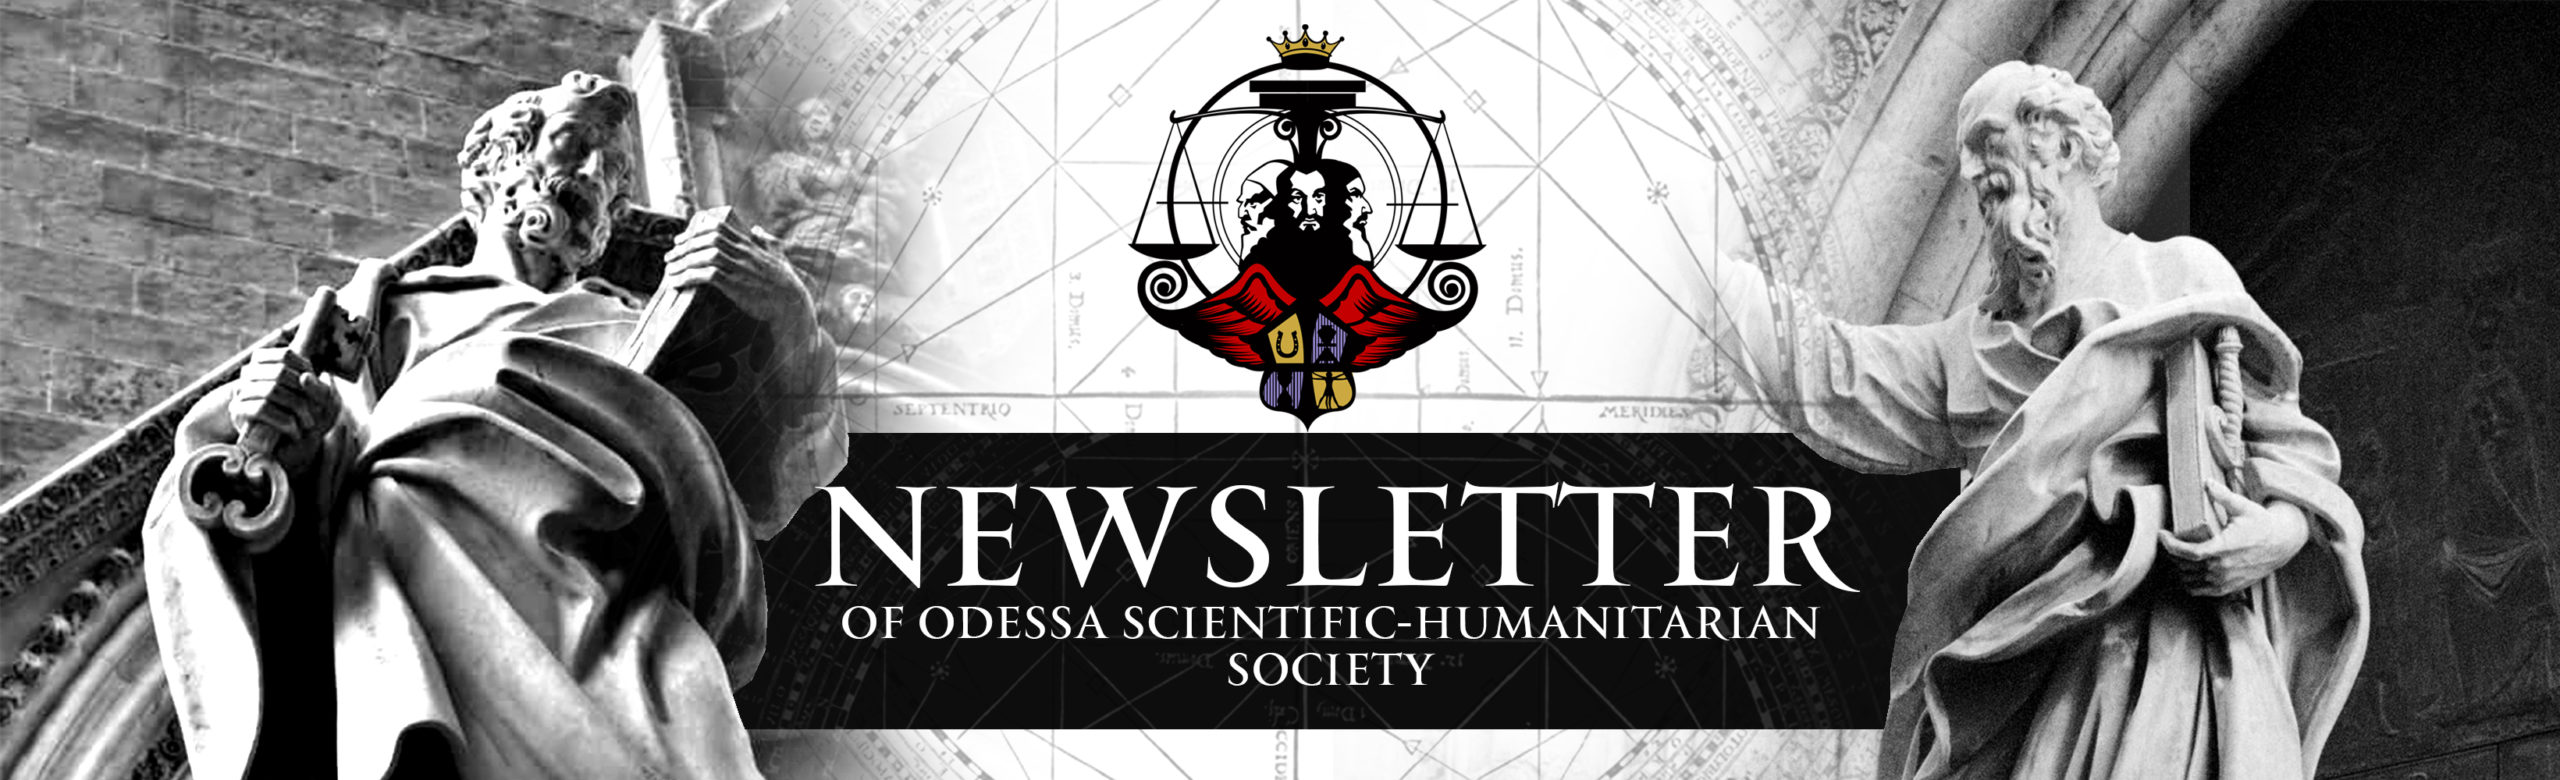 Newsletter of Odessa Scientific-Humanitarian Society